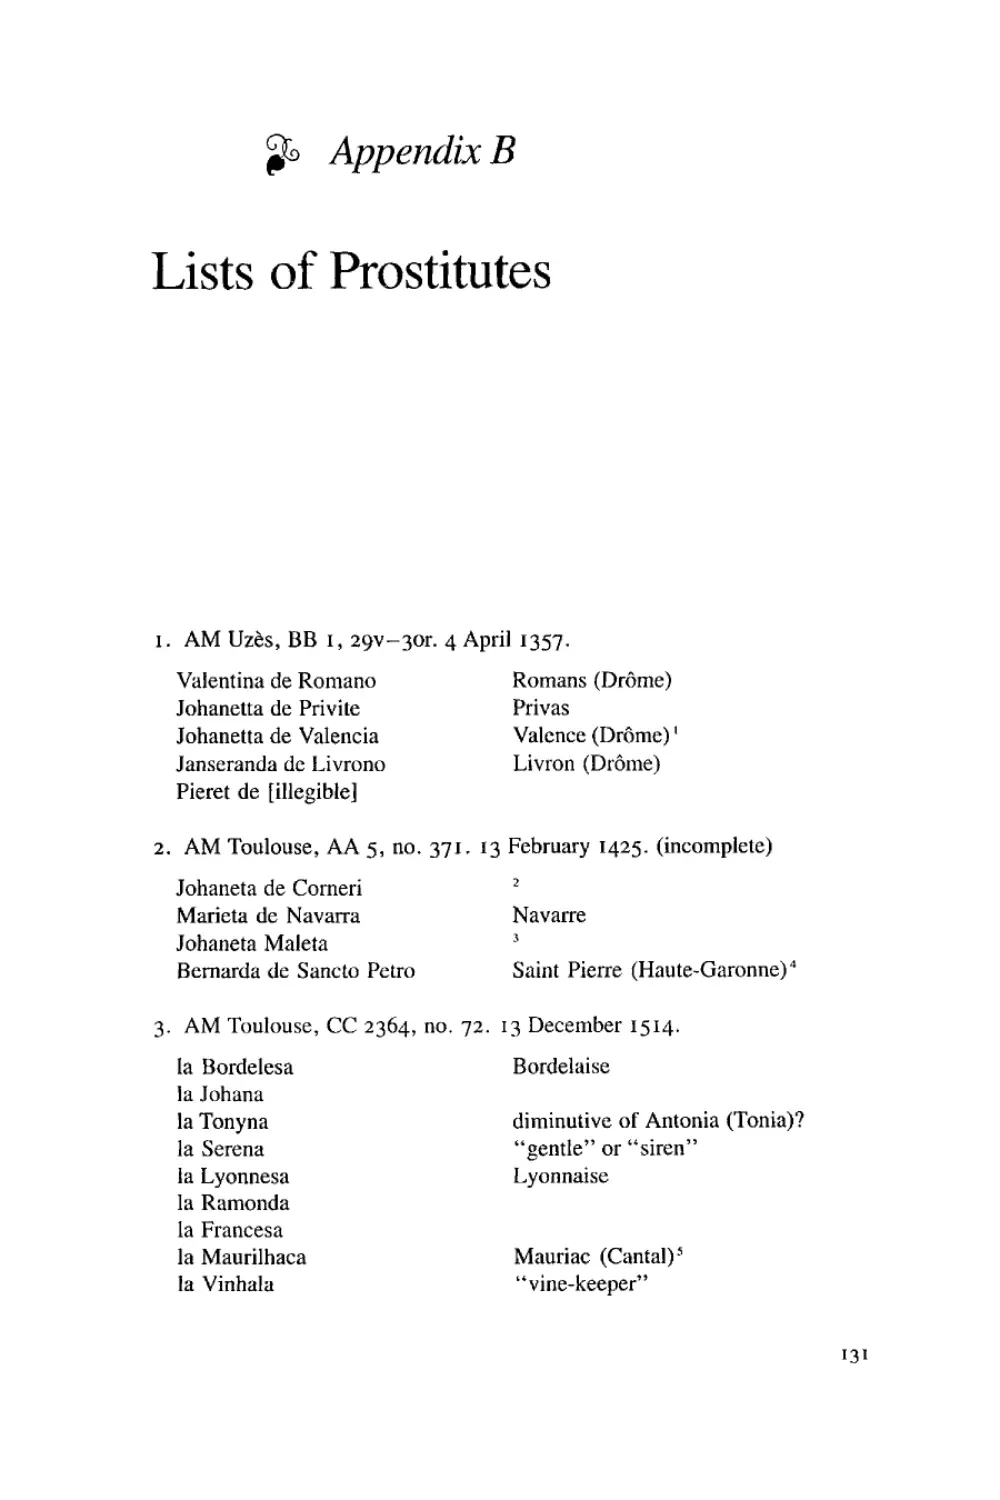 Appendix B: Lists of Prostitutes